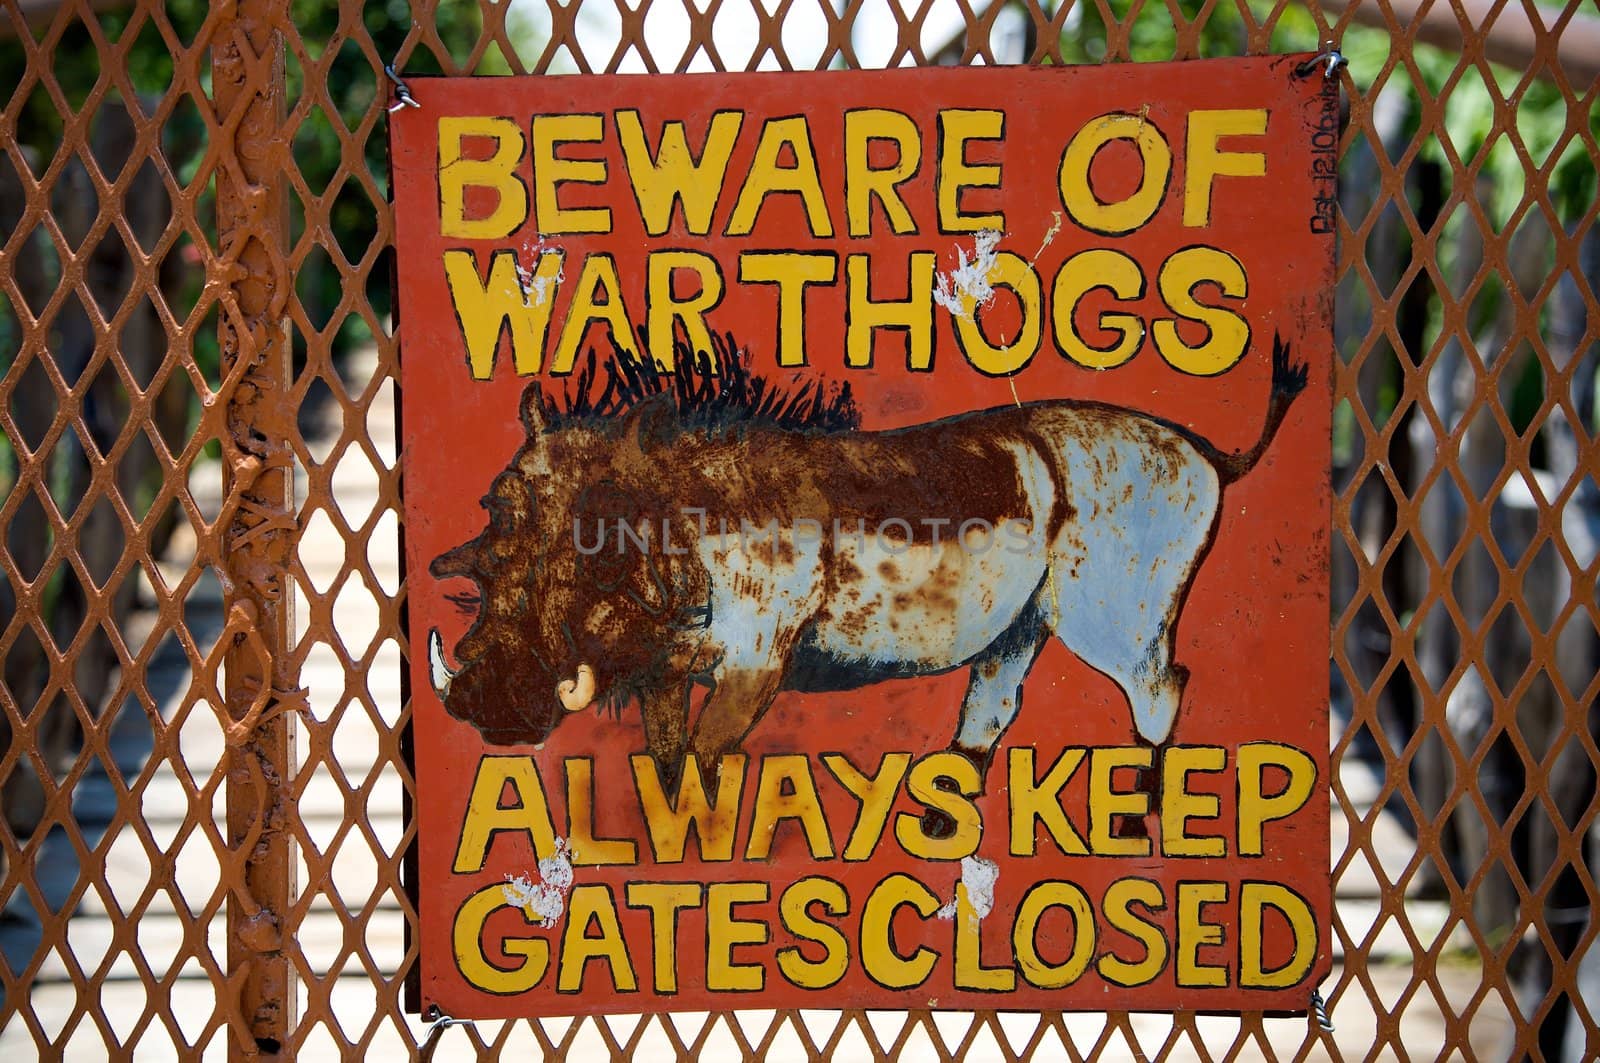 Beware of warthogs signboard in Harnas foundation